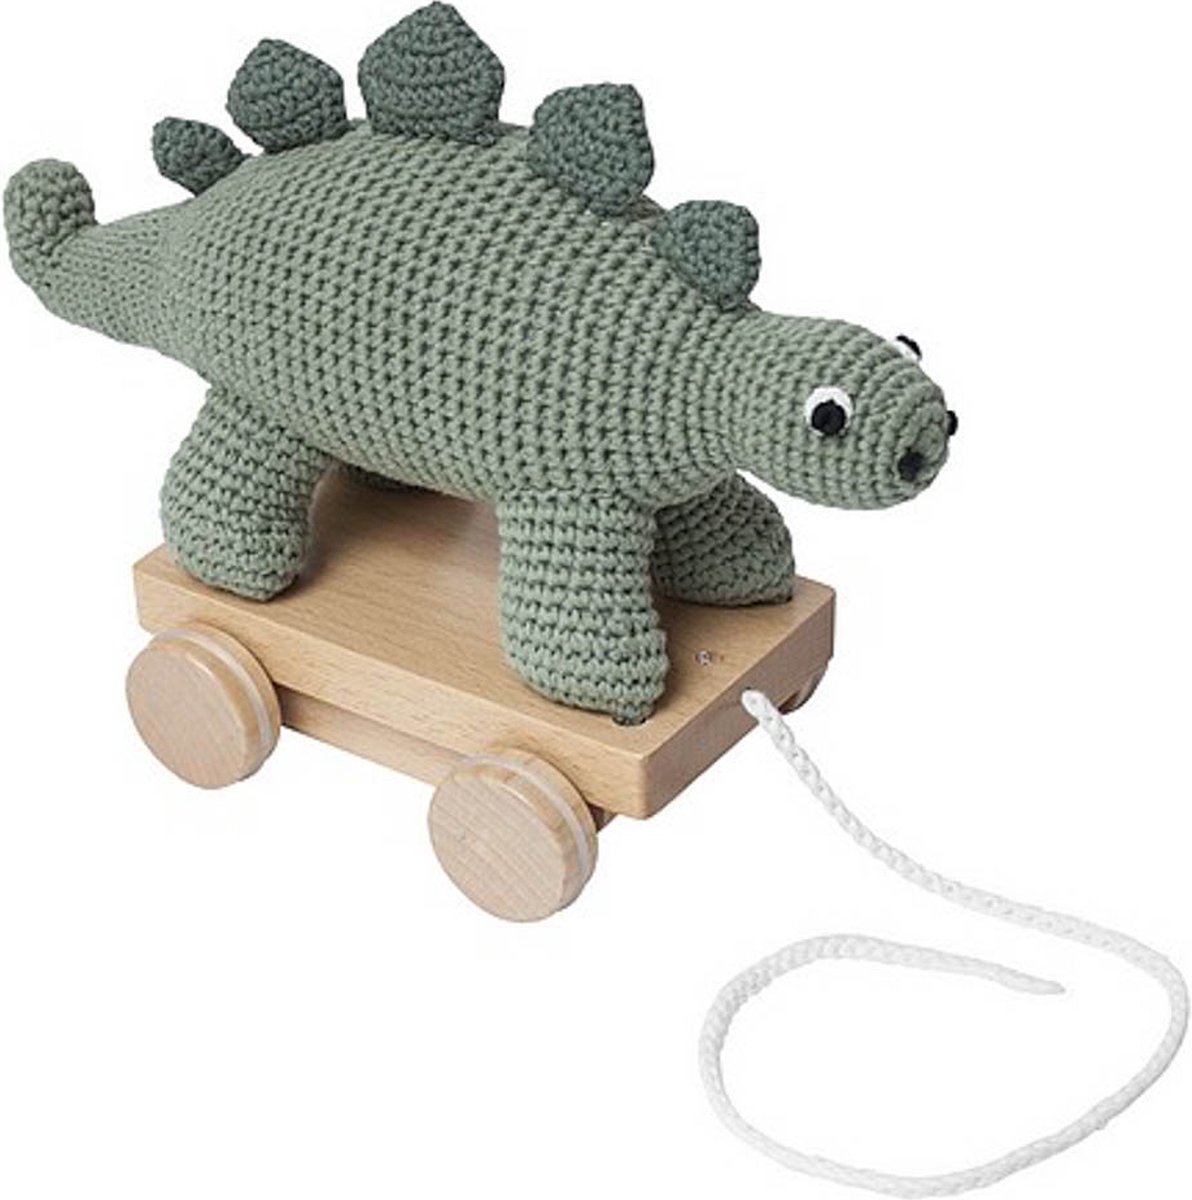 Sebra Pull jouet dino crocheté 22x13x26cm | bol.com